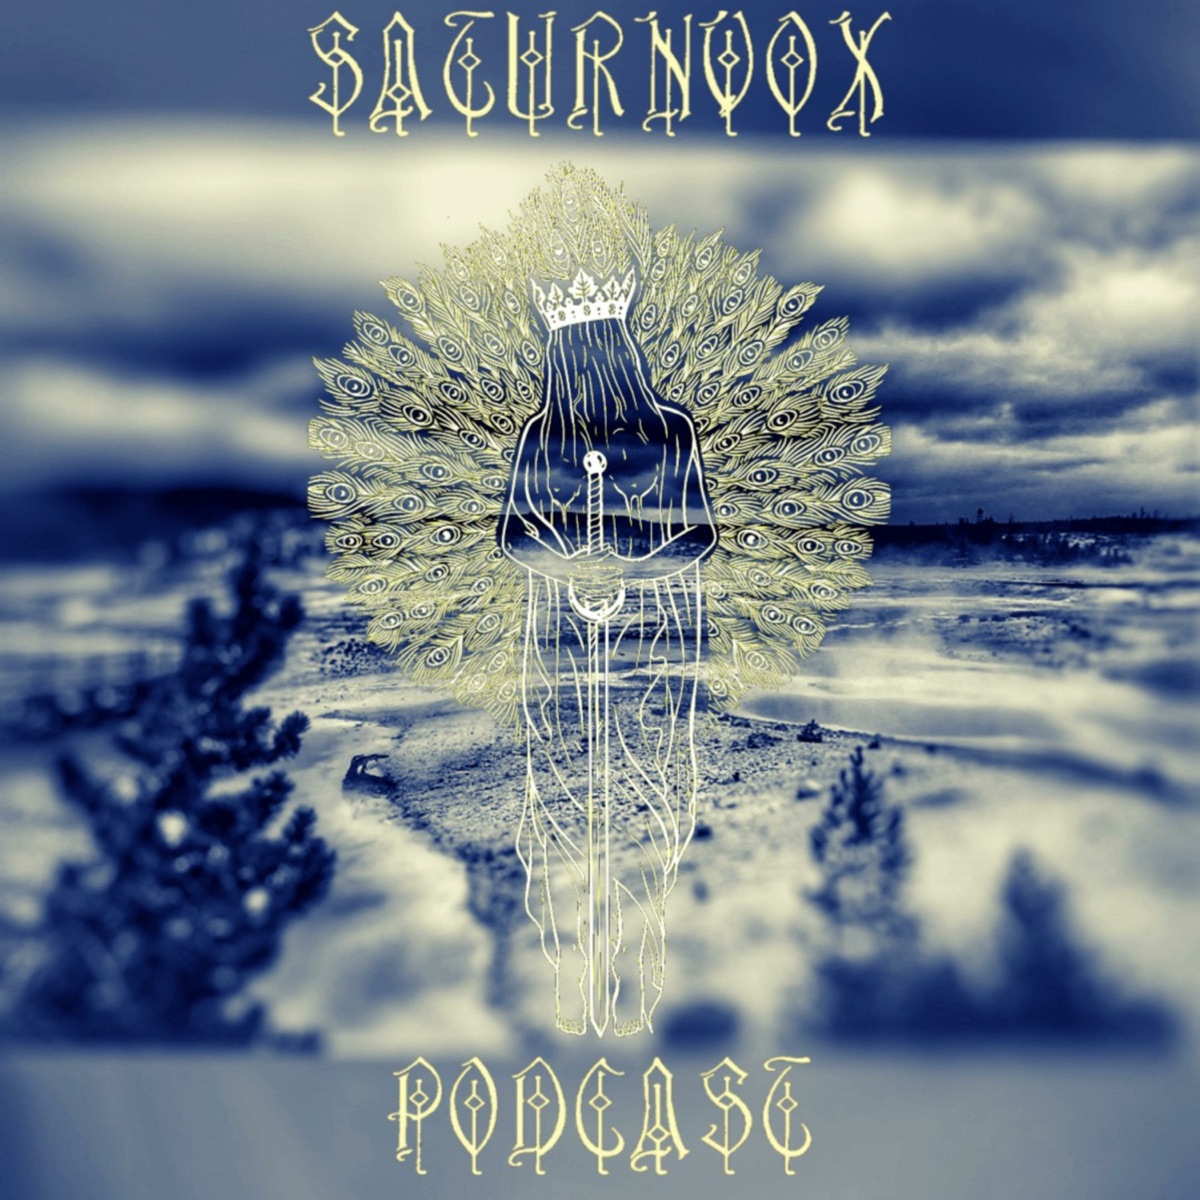 SaturnVox – Podcast – Podtail